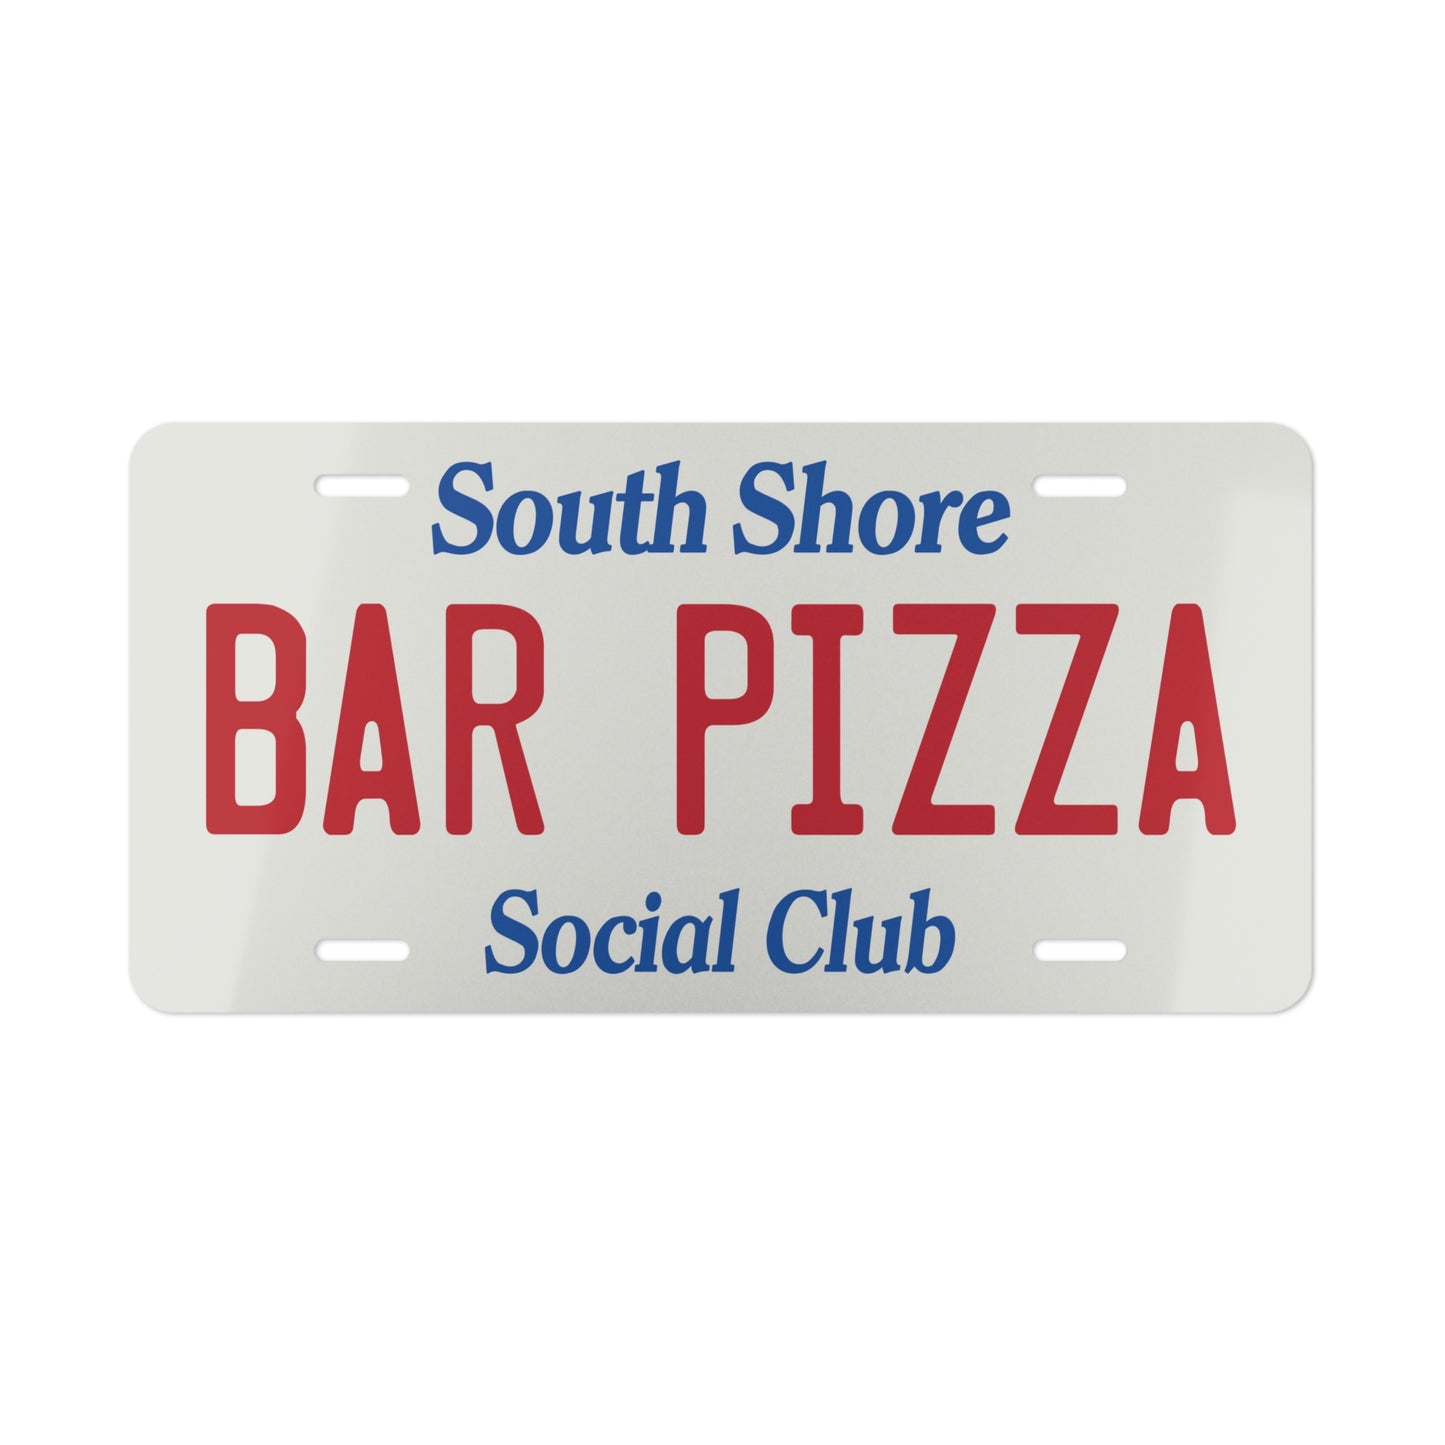 South Shore Bar Pizza Social Club MA Vanity Plate